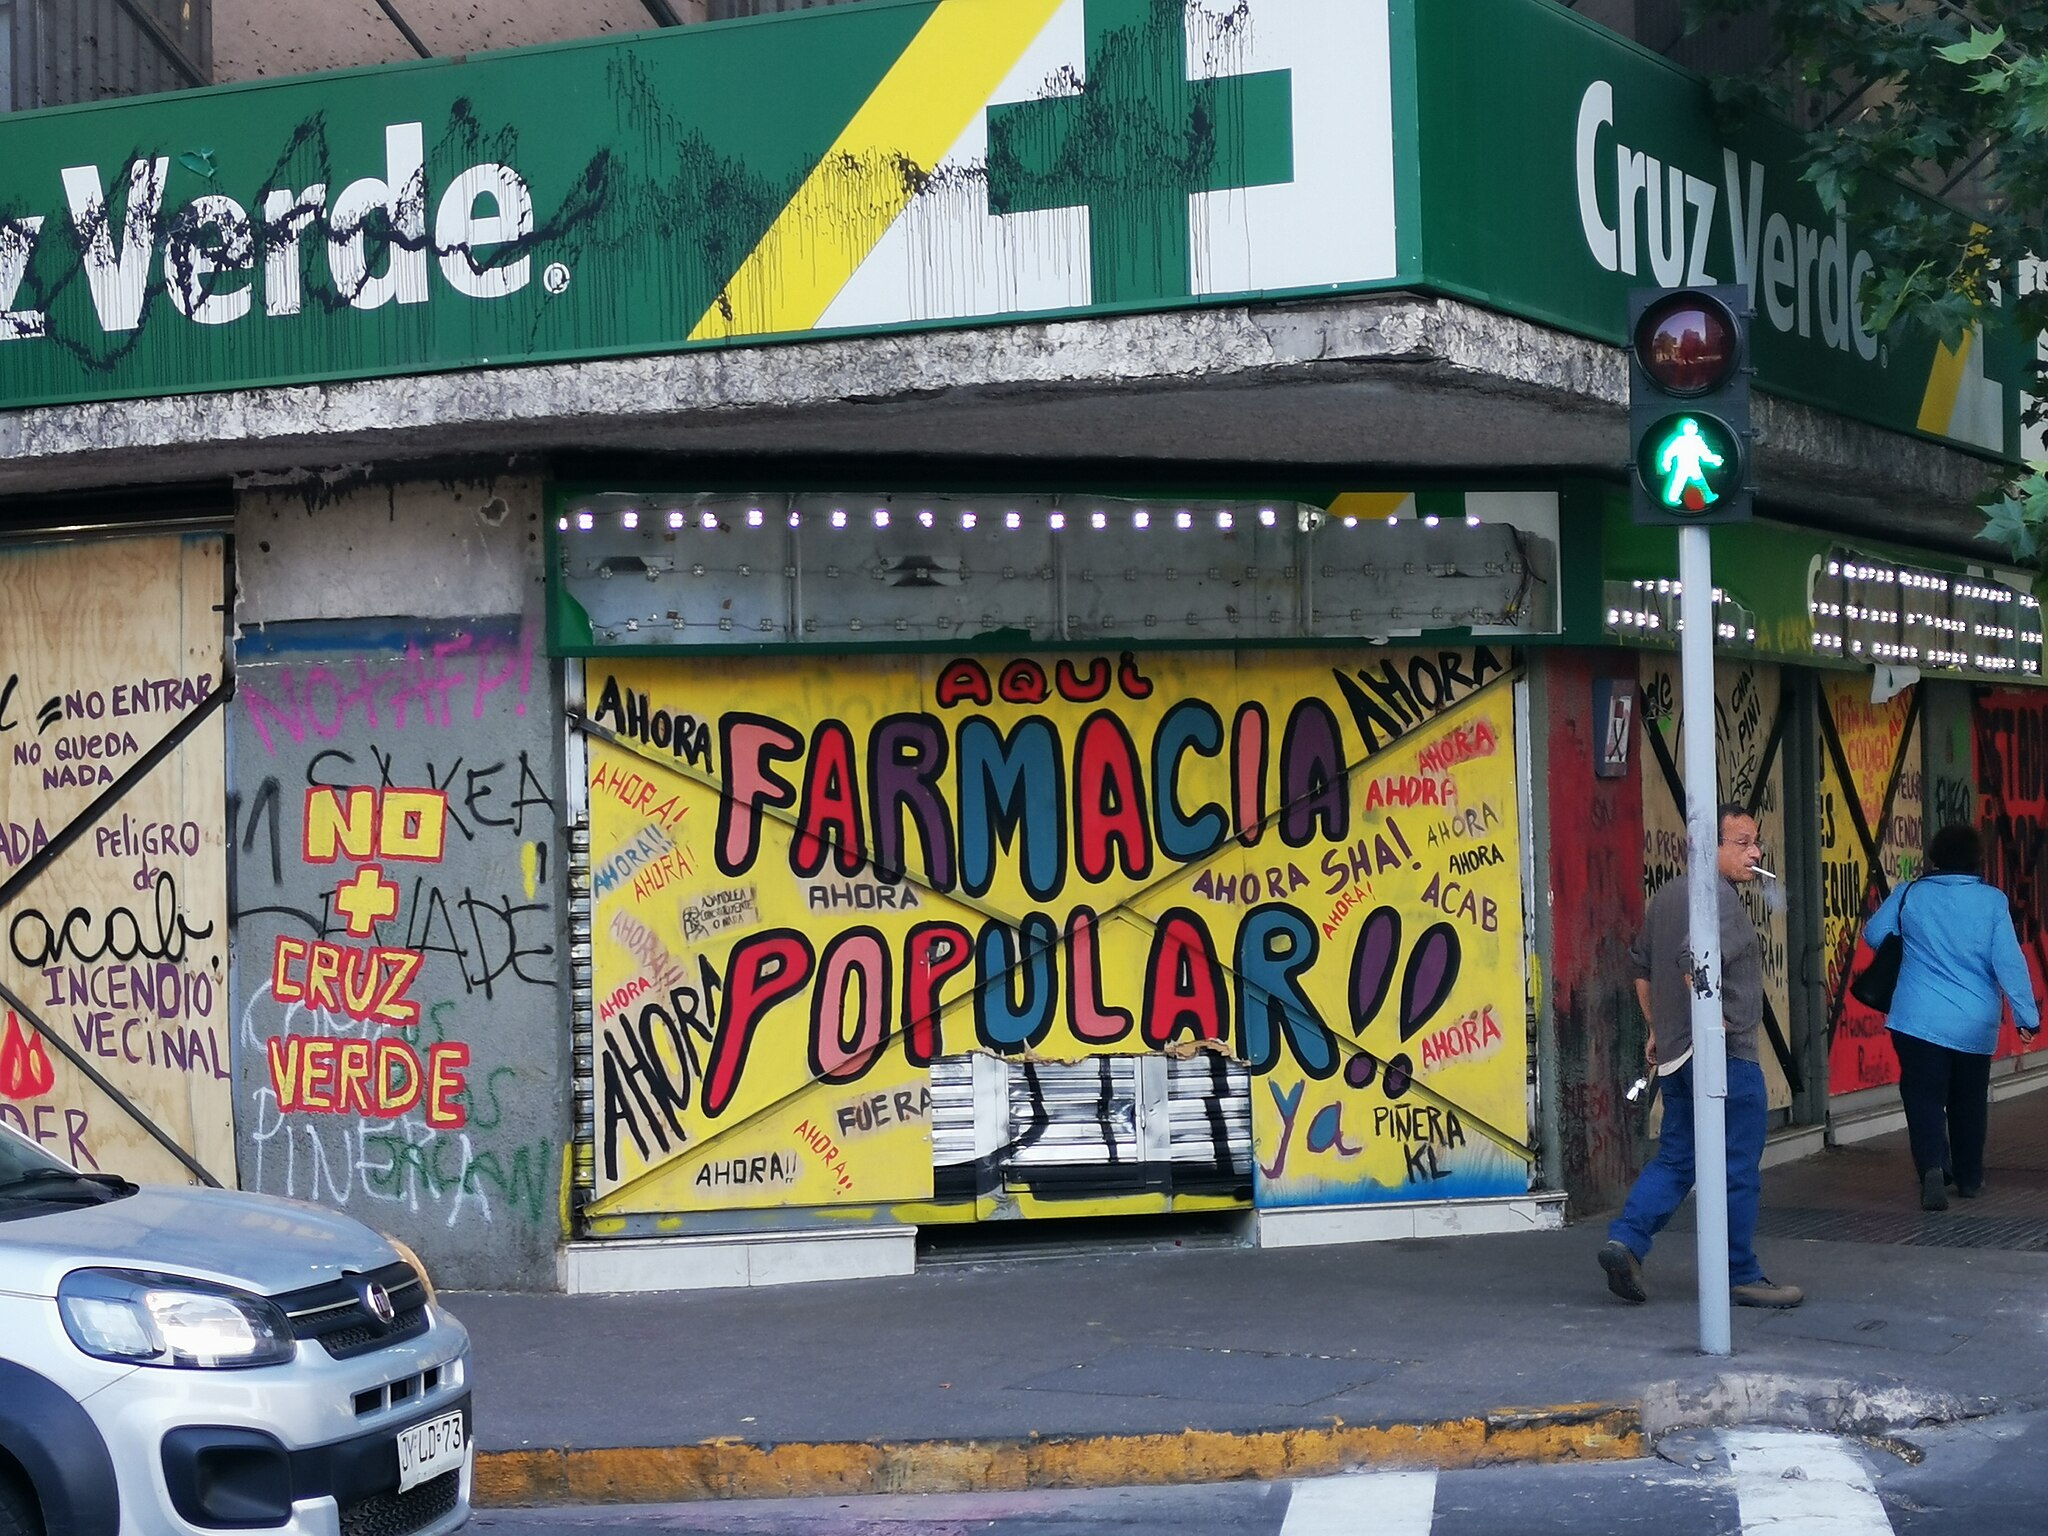 Pharmacy with graffiti